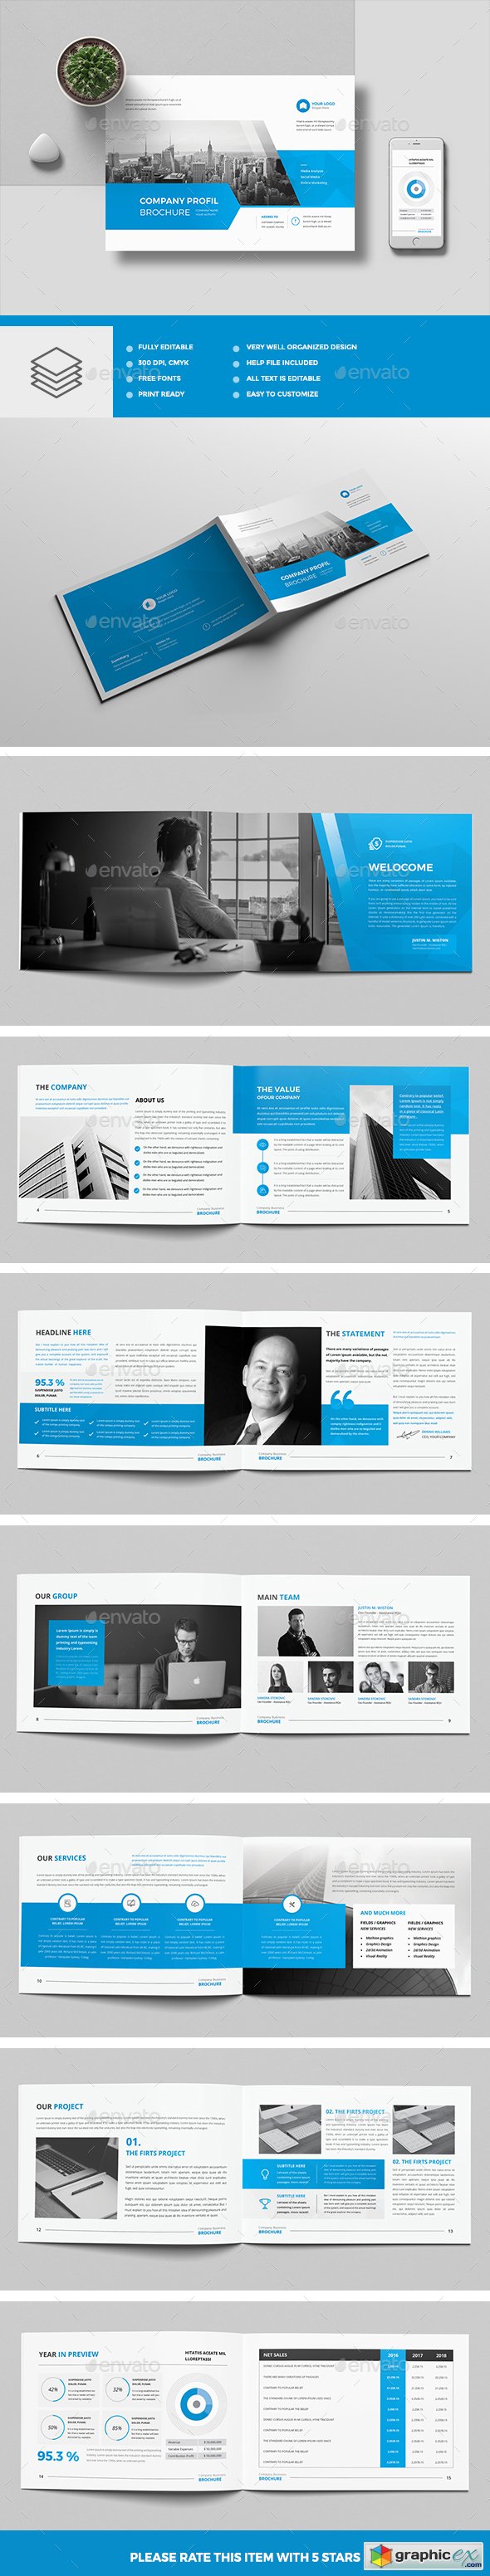 The Blue Corporate Brochure Landscape